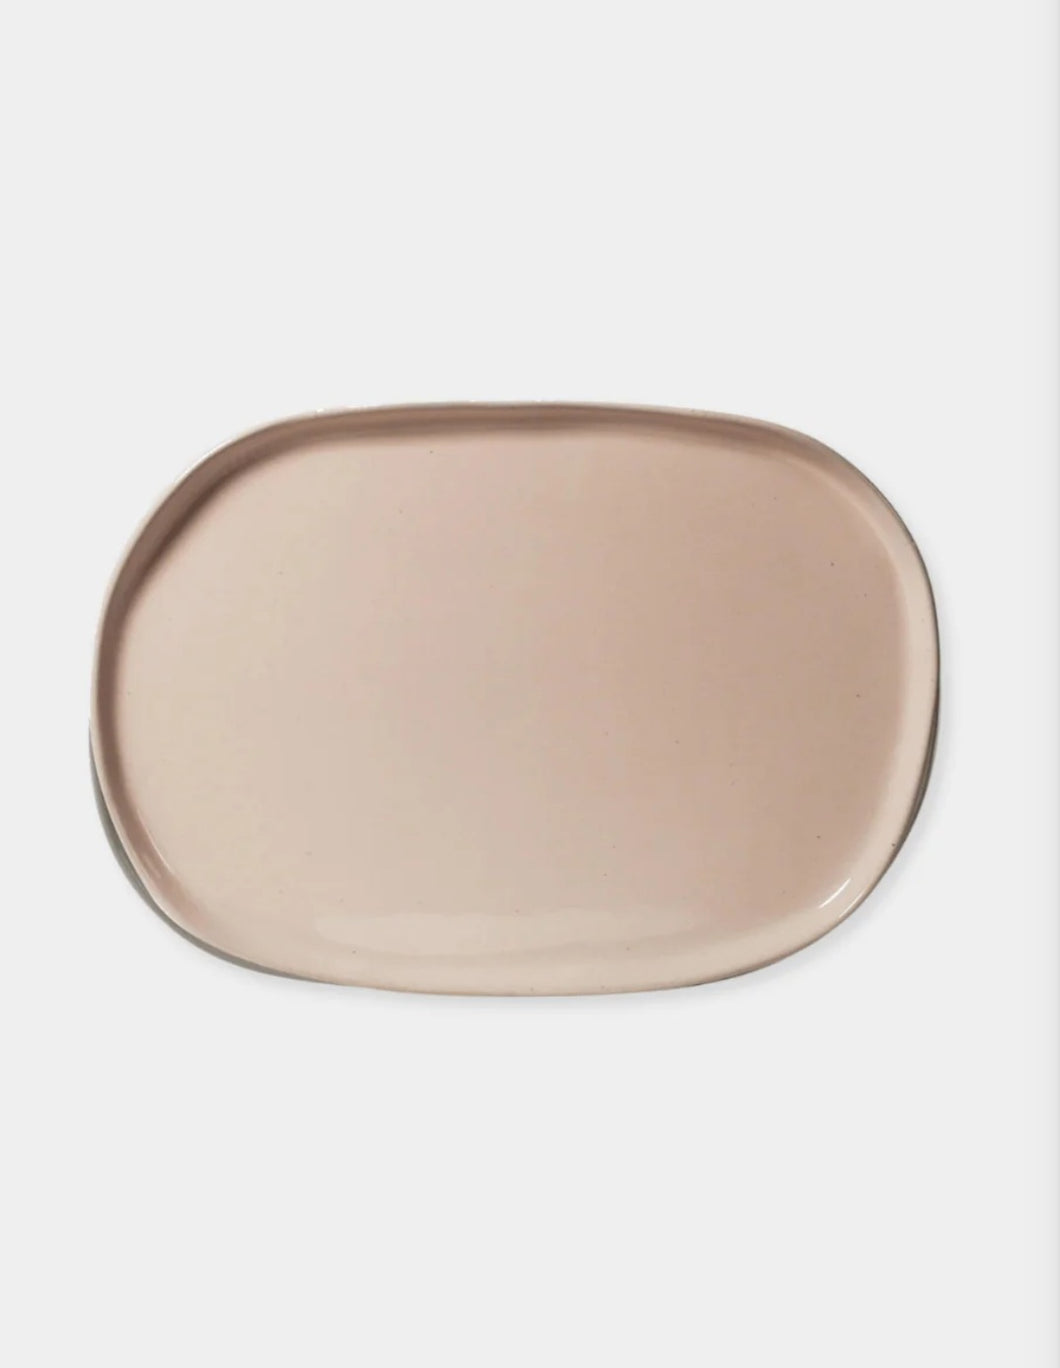 Terrain Blush Platter by Robert Gordon